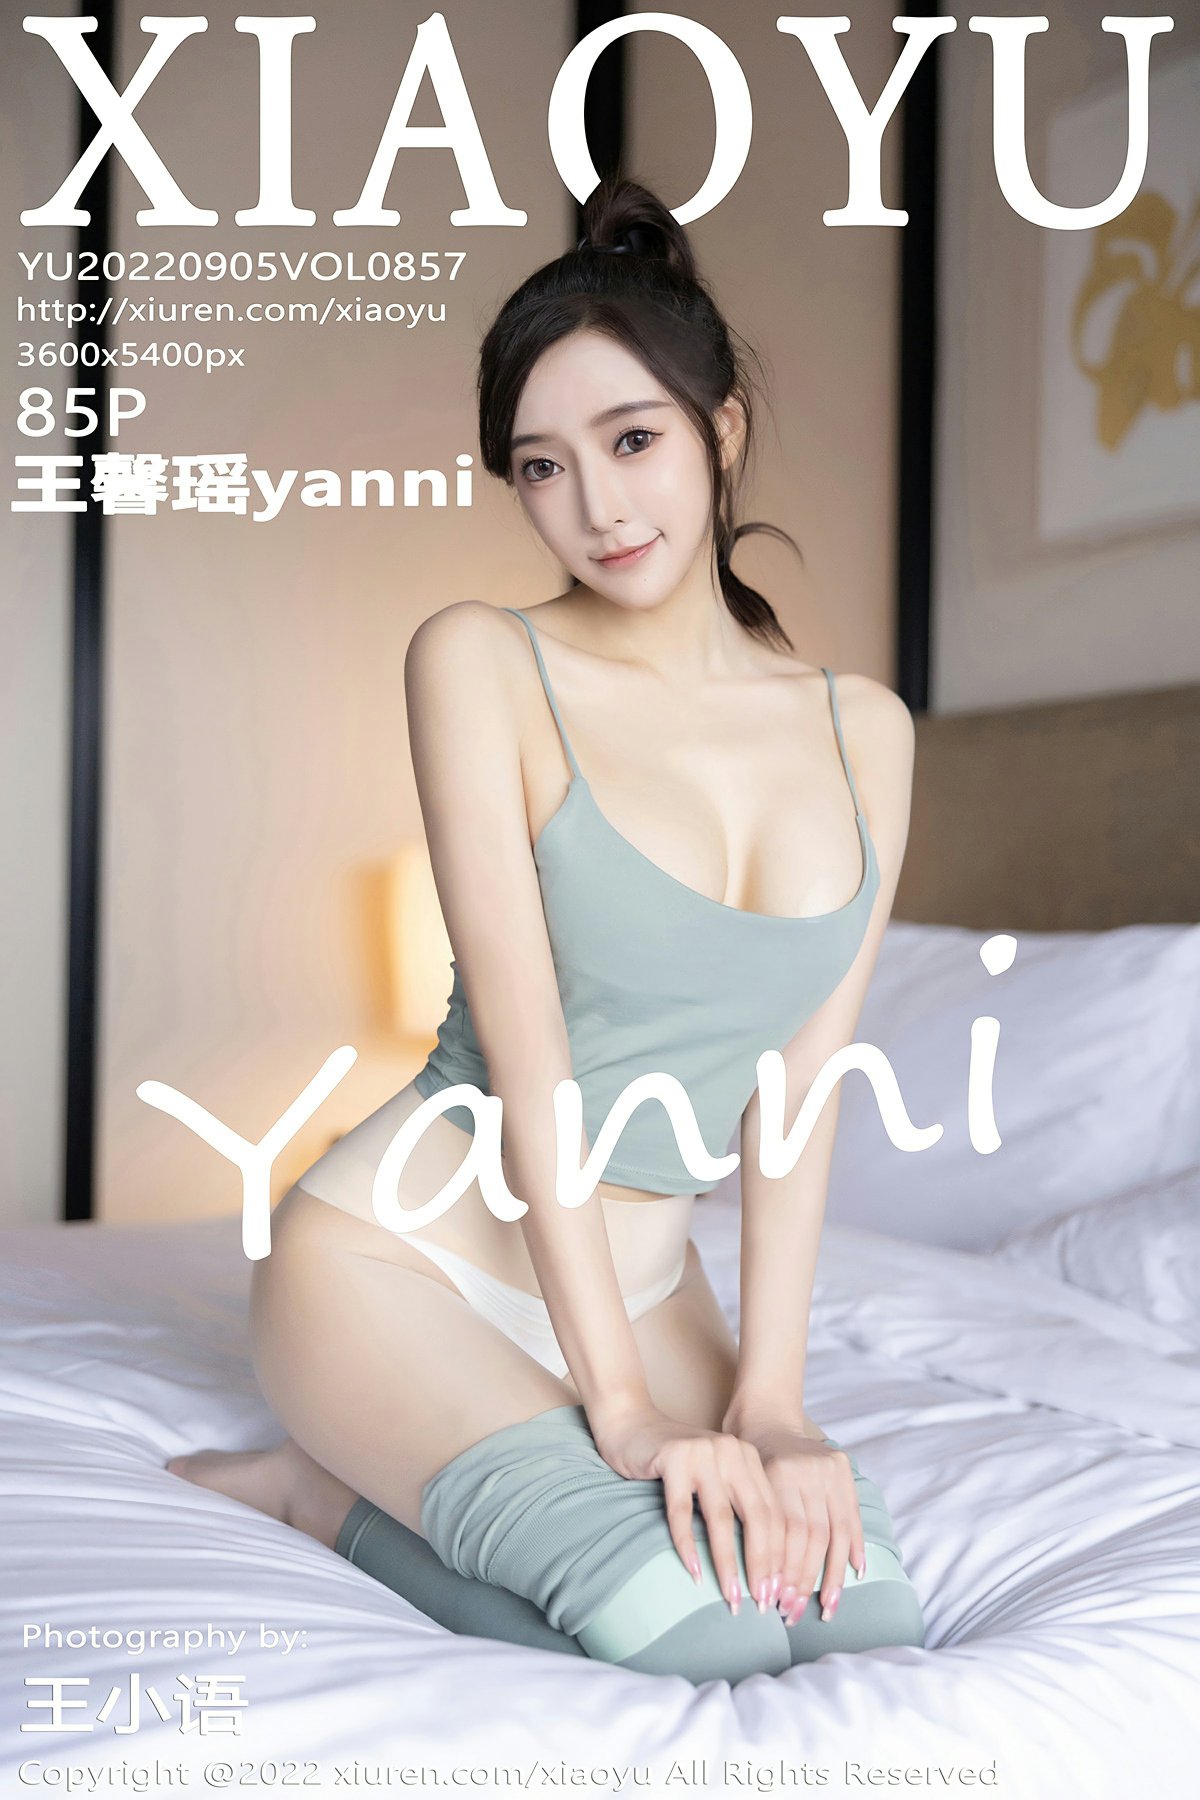 [XIAOYU语画界] VOL.857 王馨瑶yanni1 